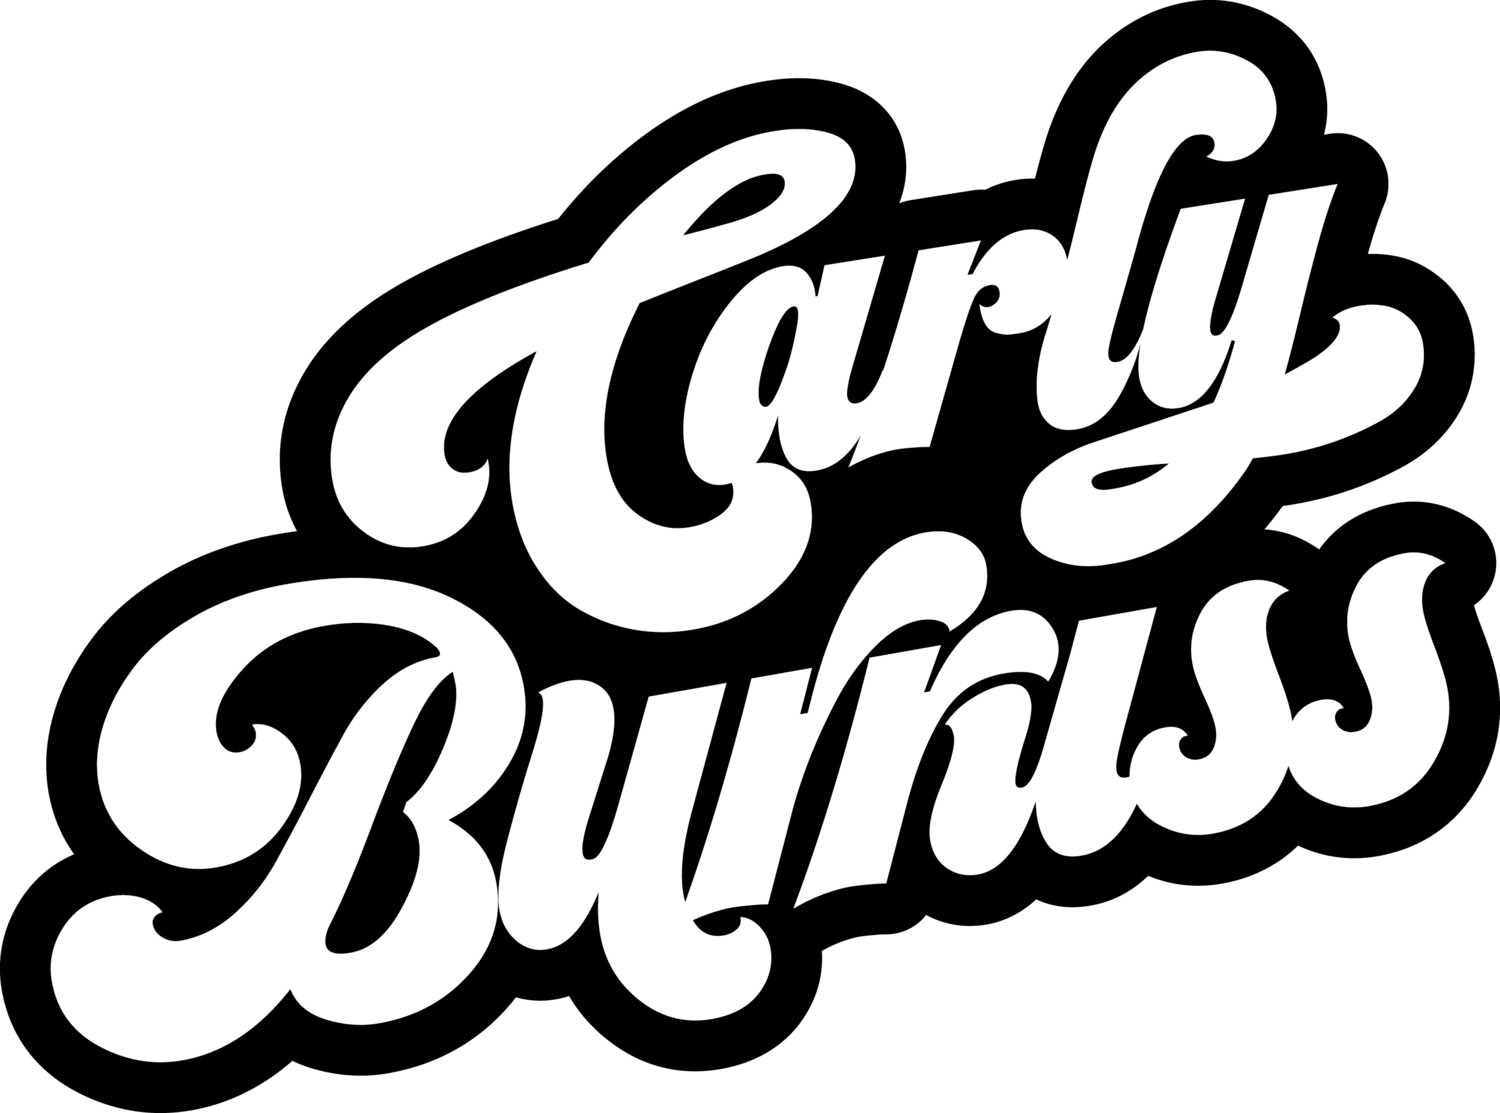 Carly Burruss